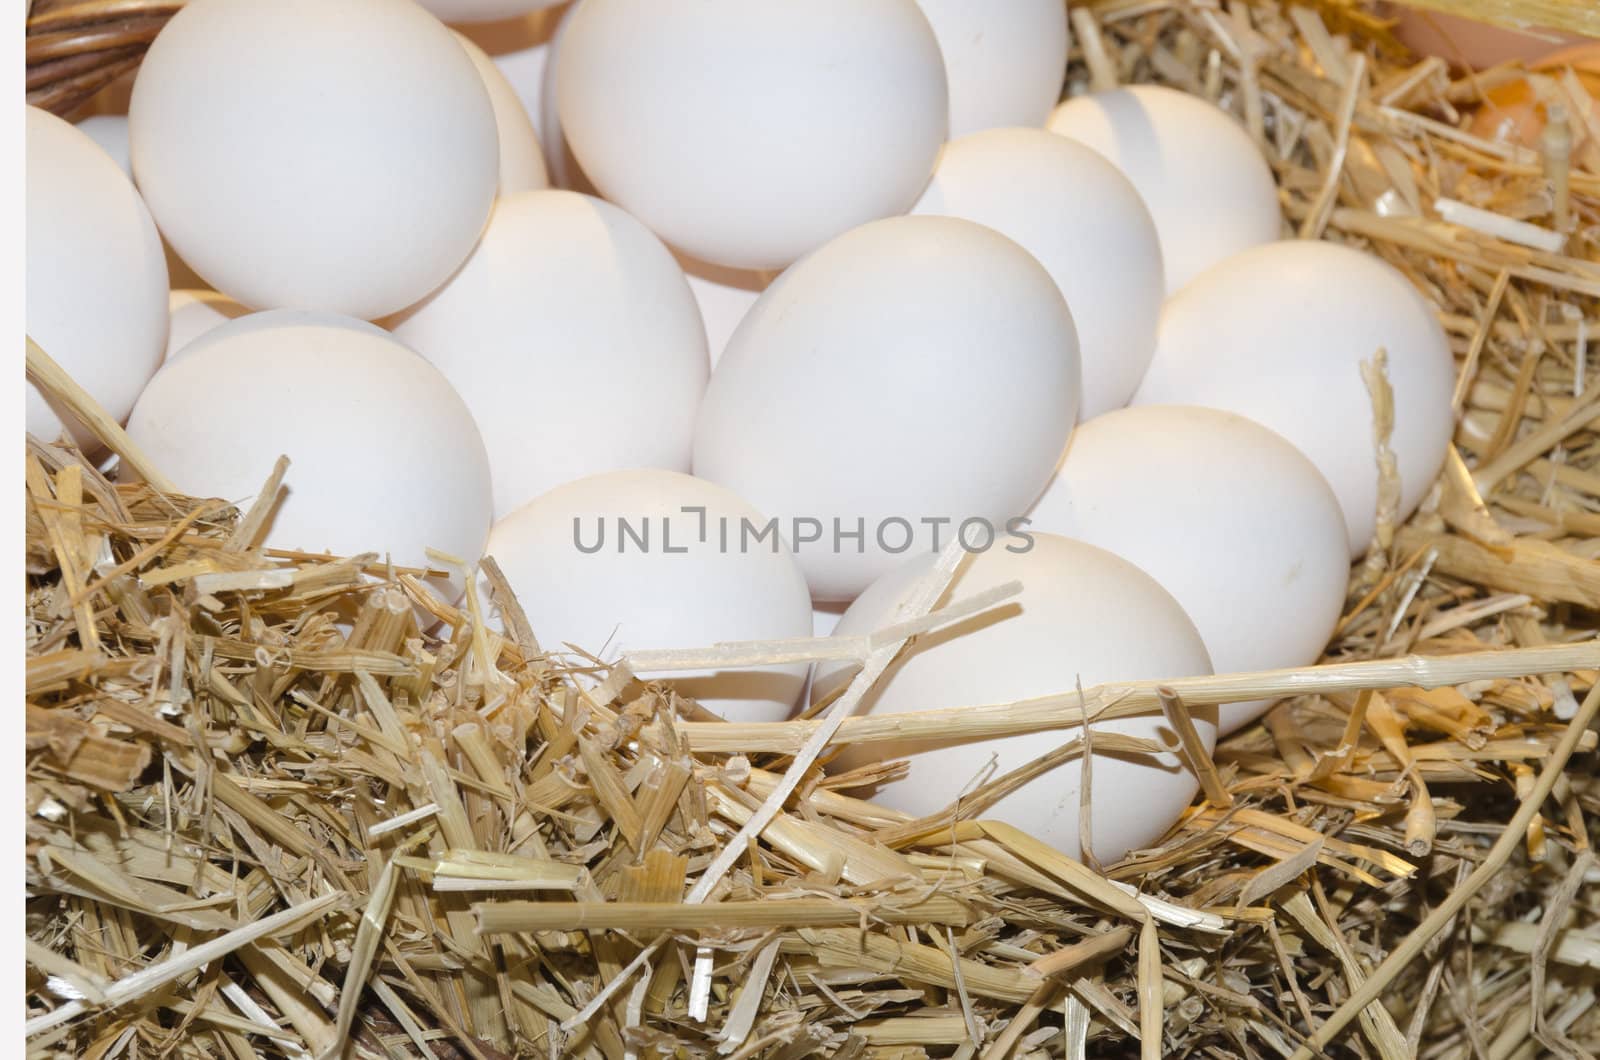 white eggs on straw in a farm